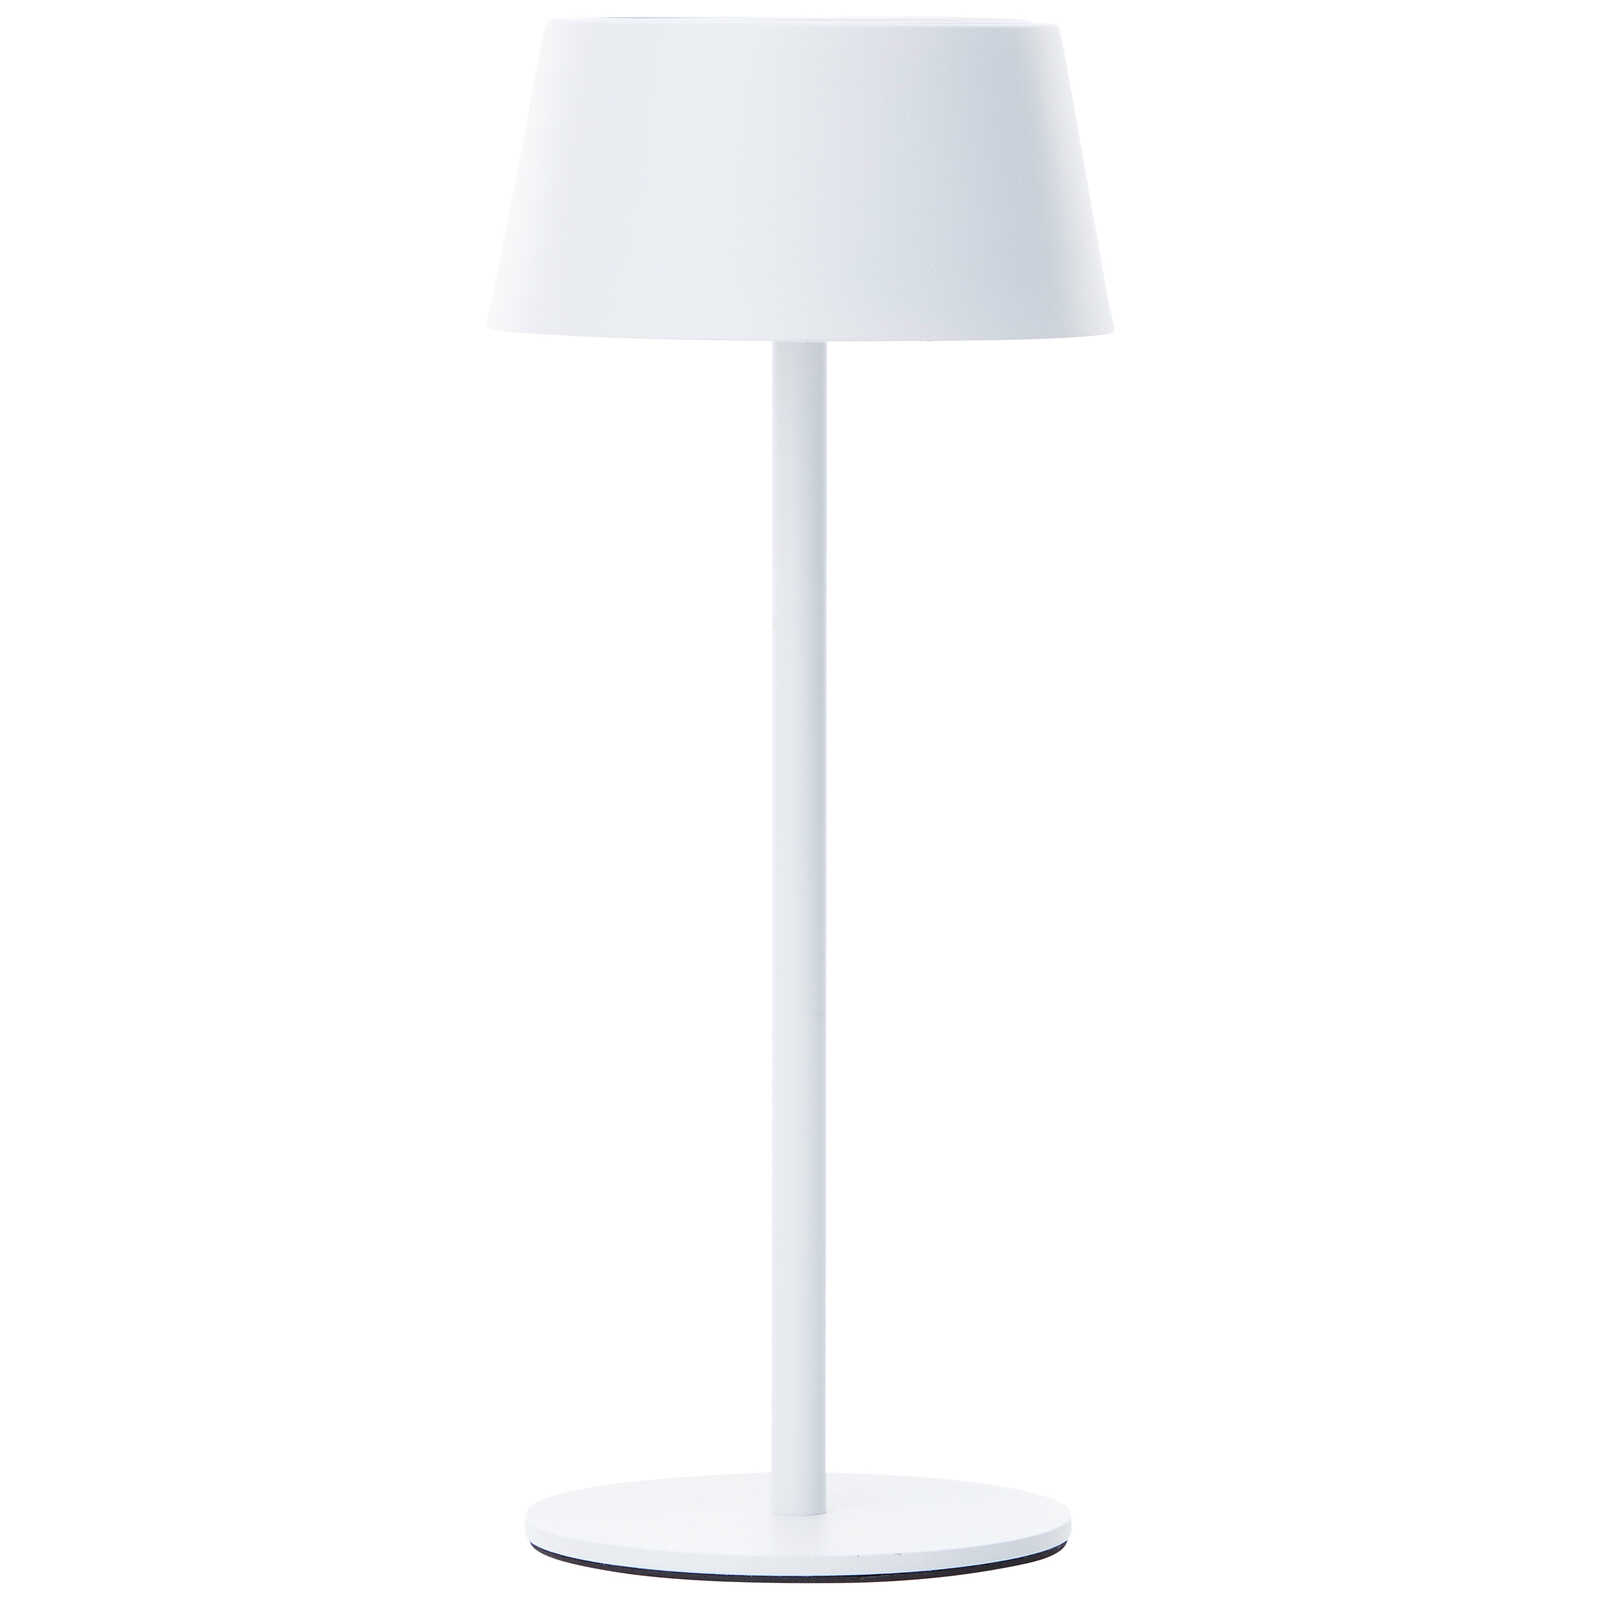             Lampe de table en métal - Outy 1 - Blanc
        